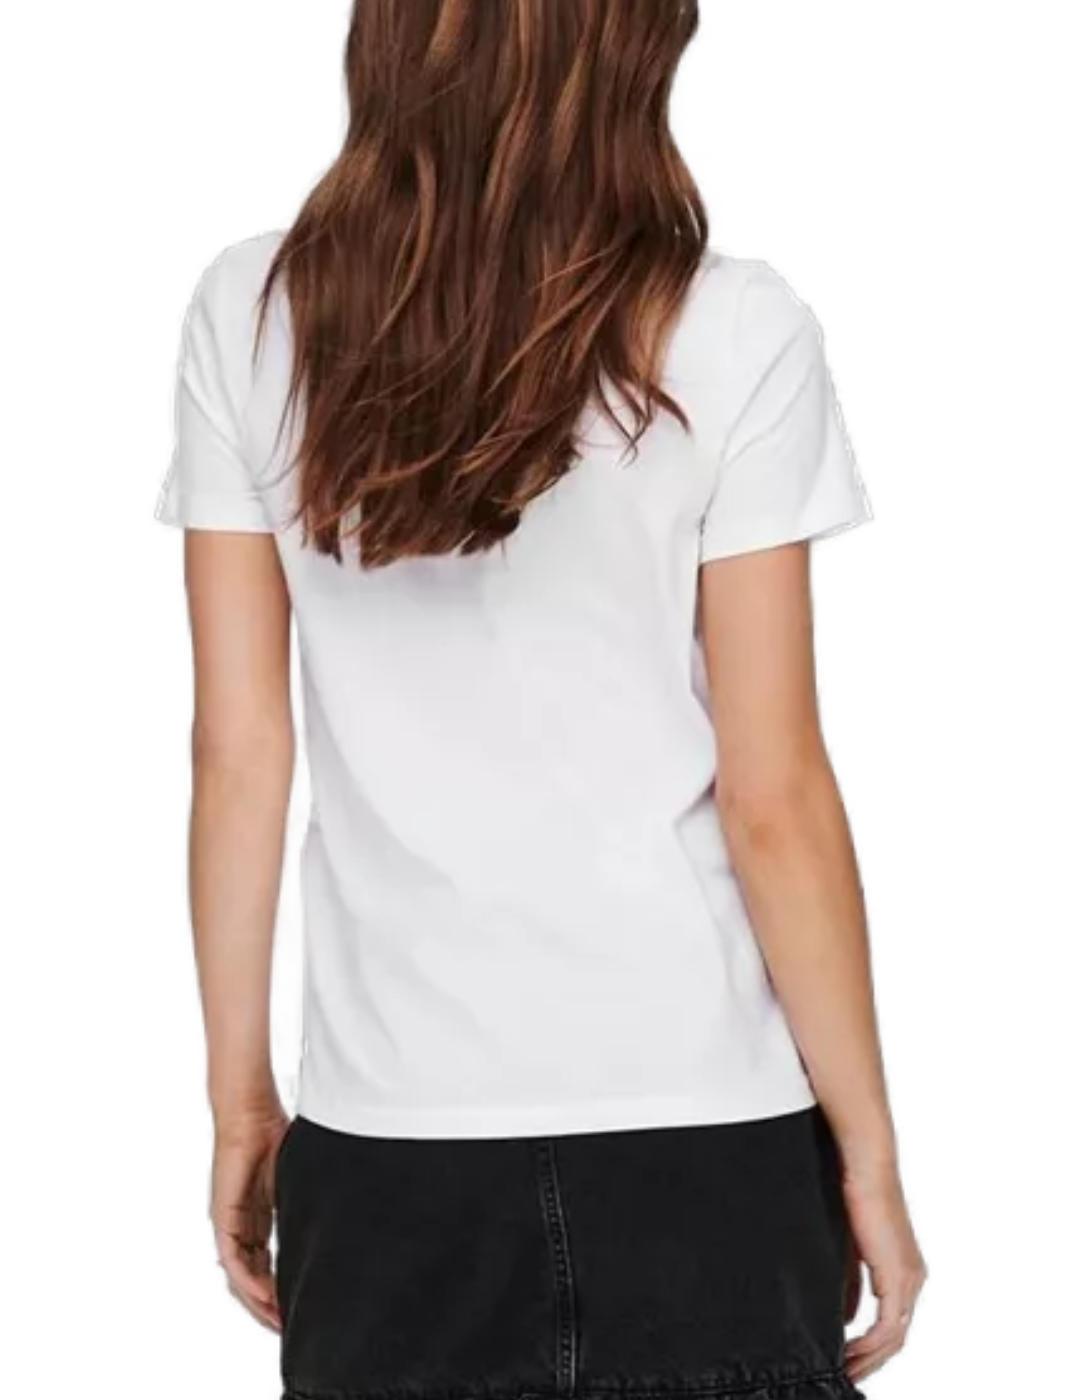 Camiseta Only Kita blanca piña manga corta de mujer